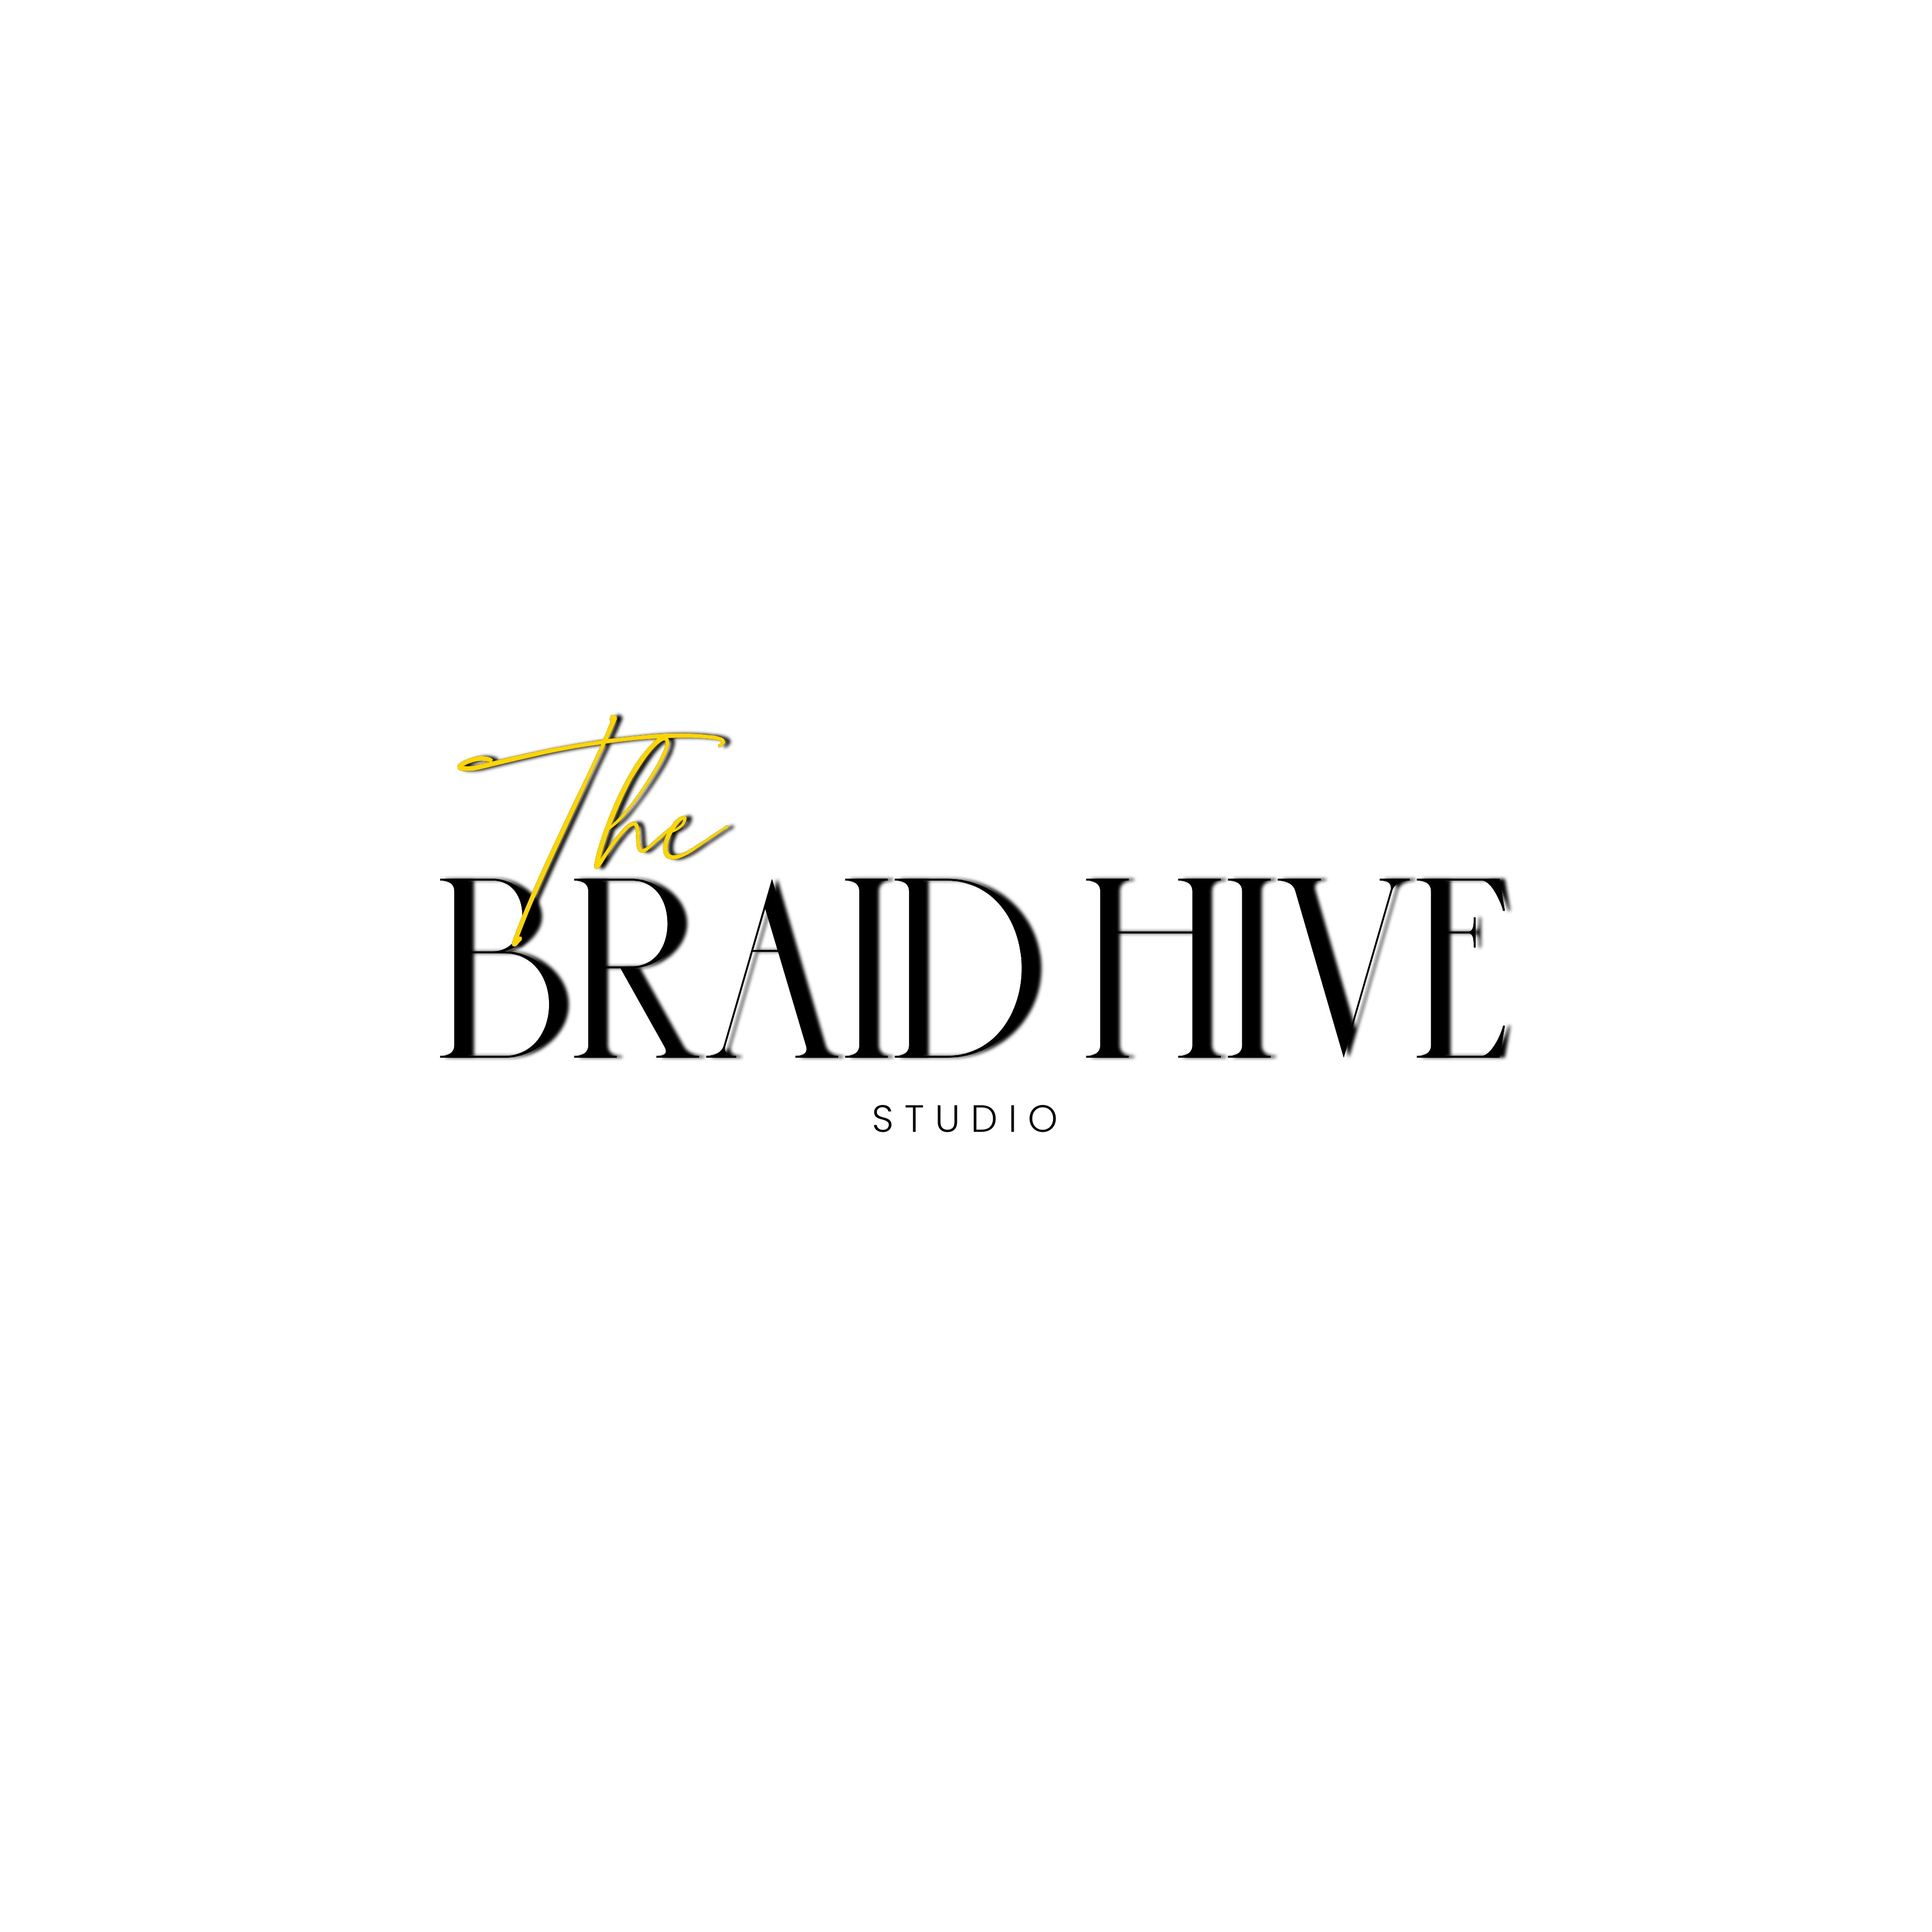 The Braid Hive